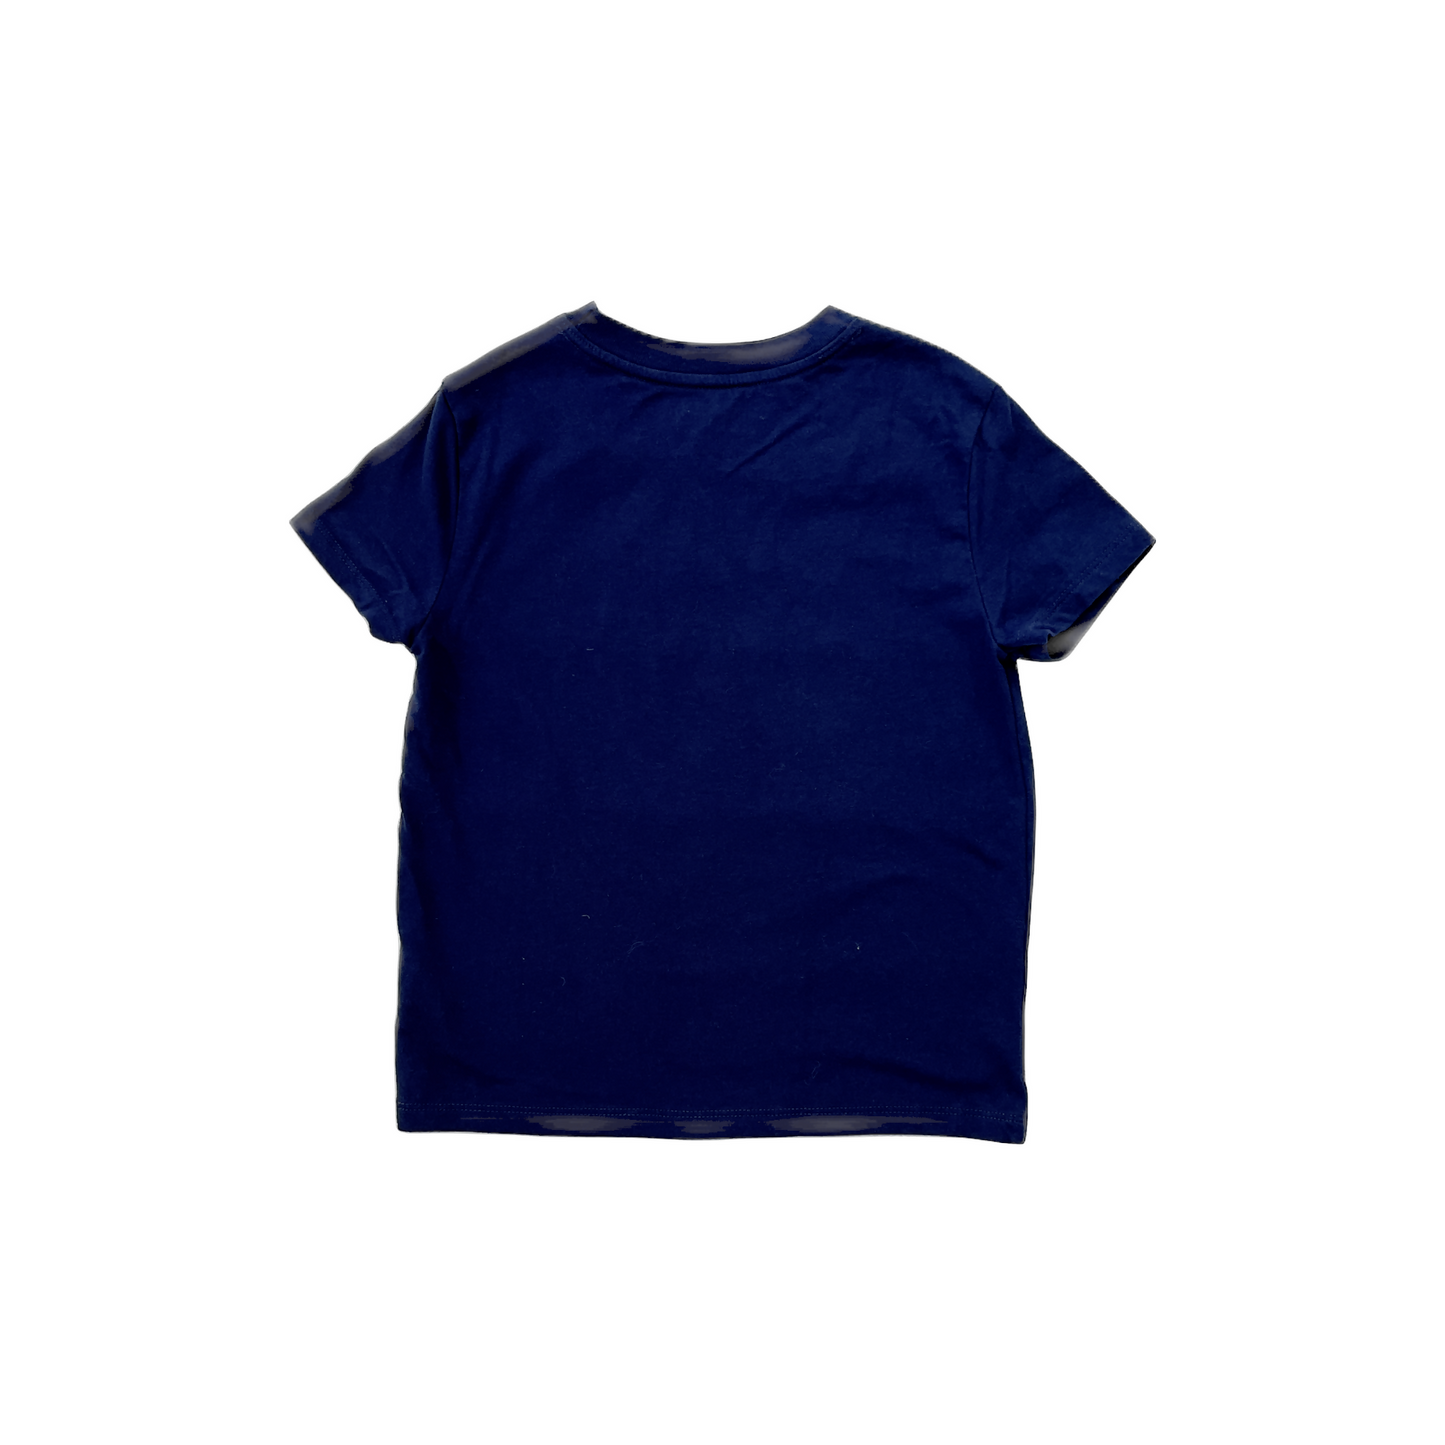 Evanston T-Shirt - Kids 4-5